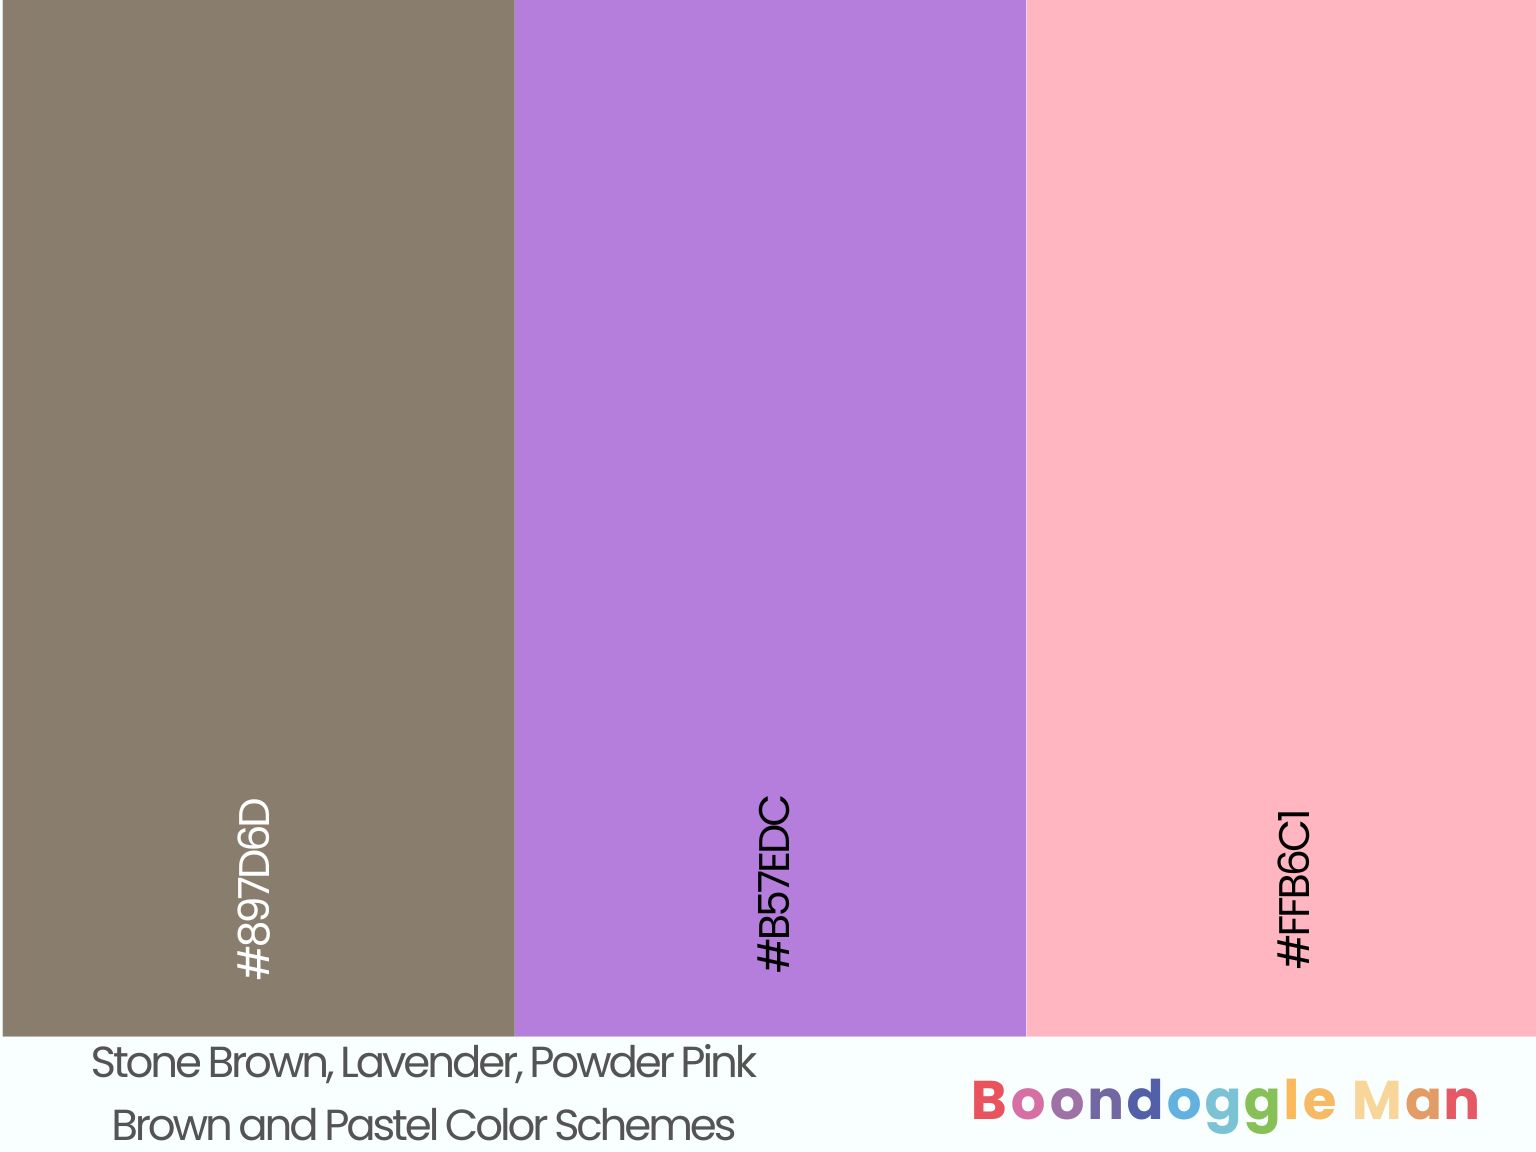 Stone Brown, Lavender, Powder Pink